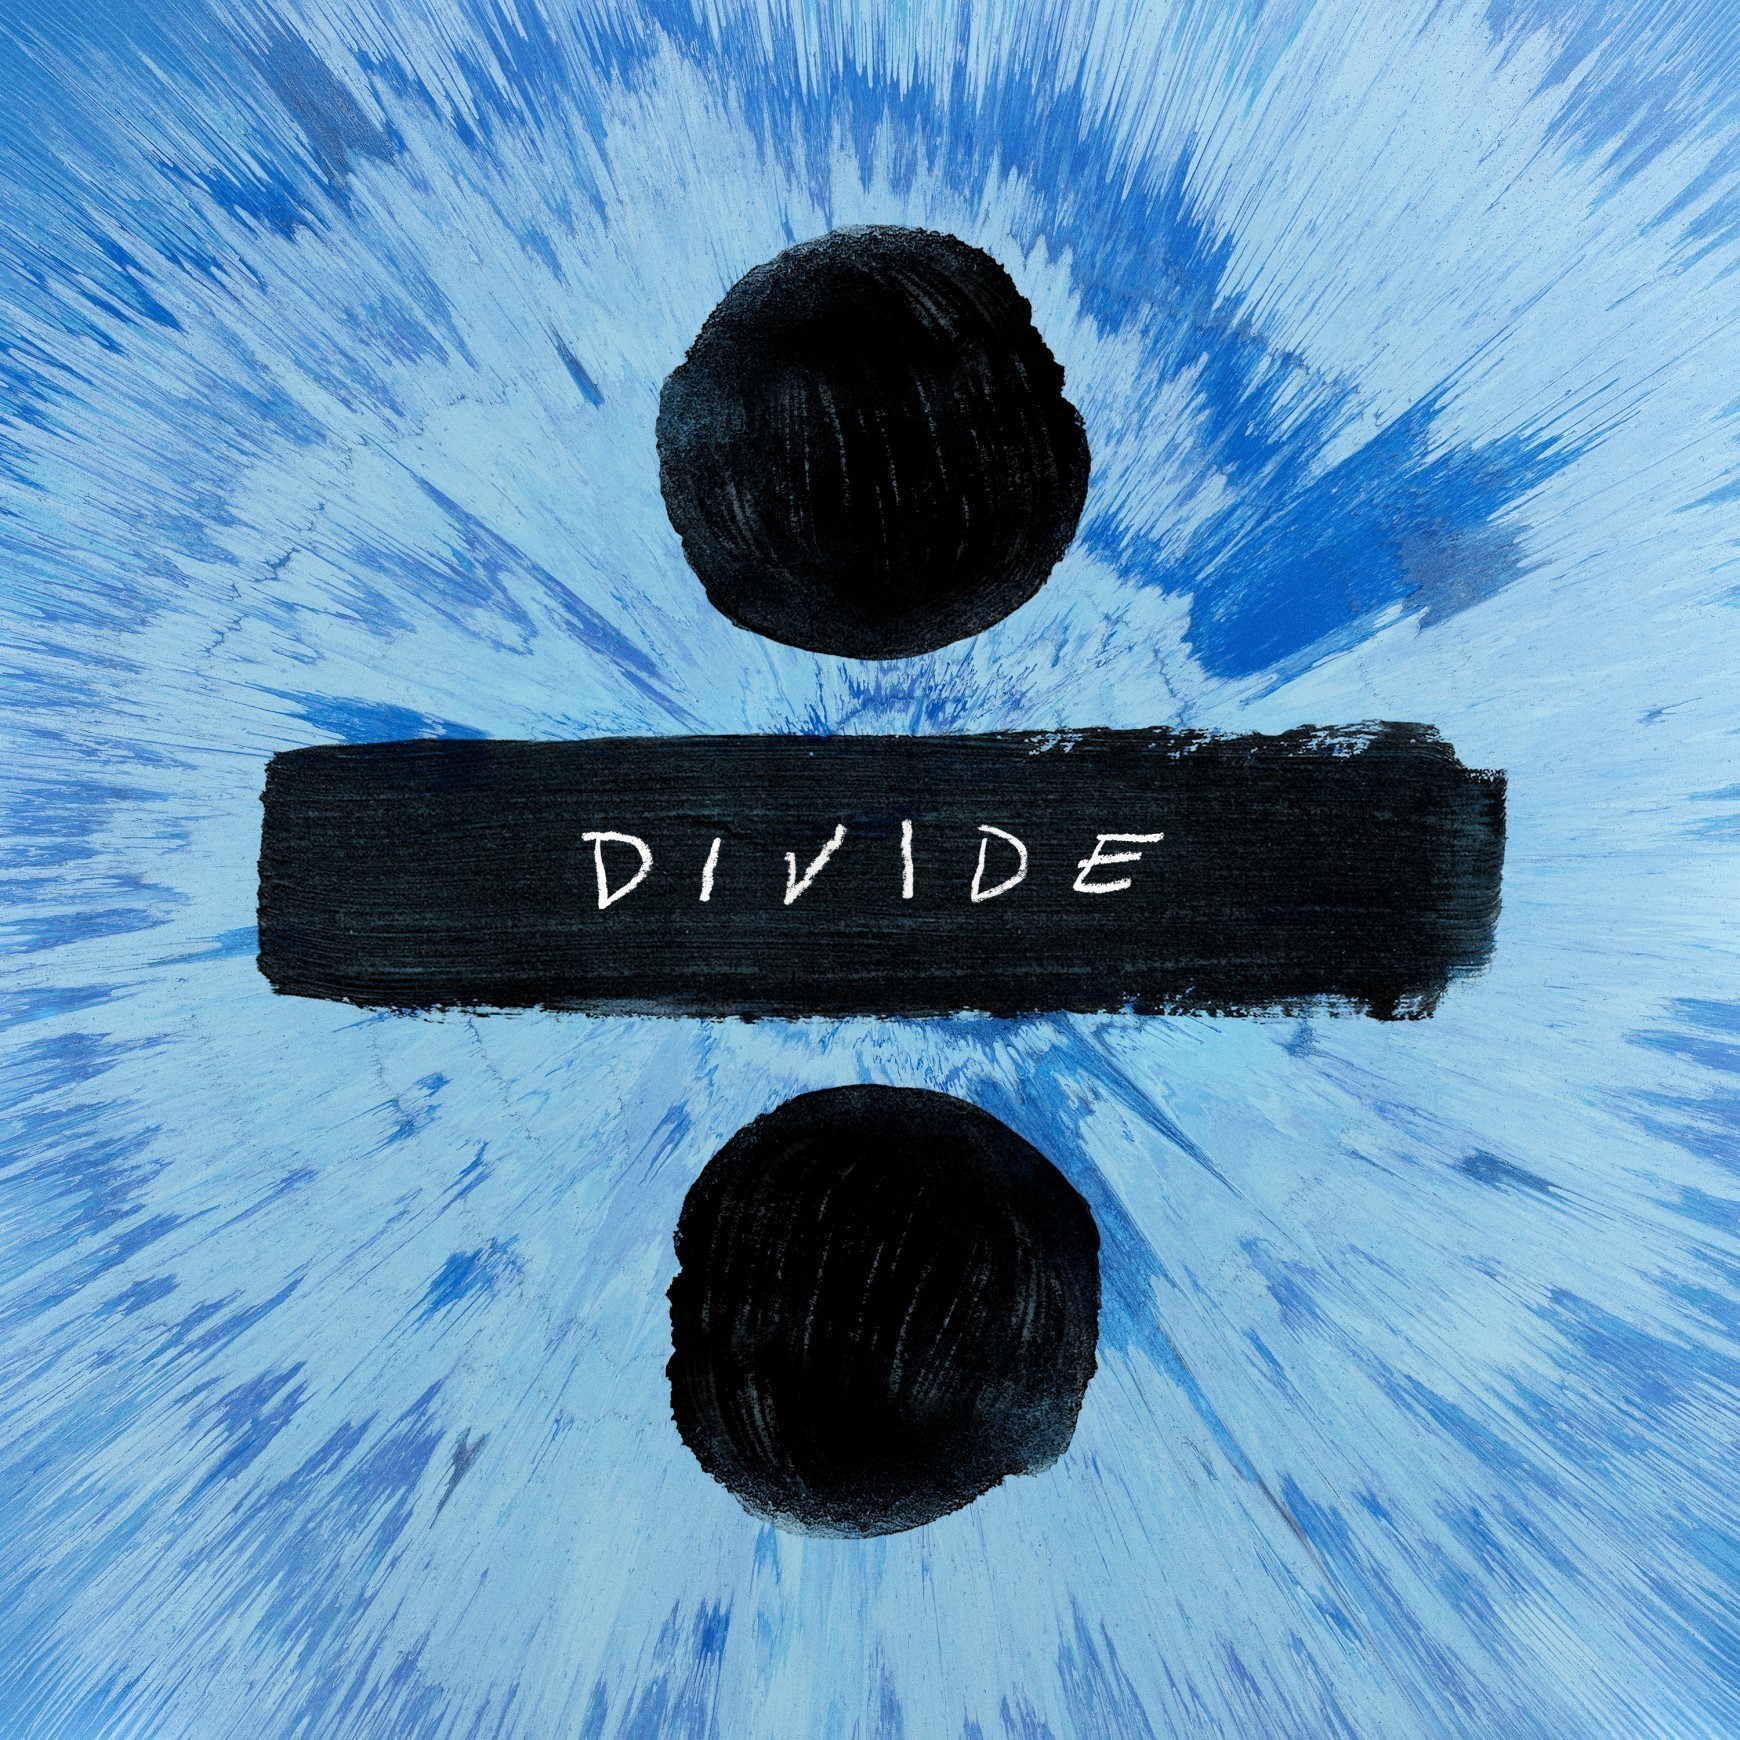 Ed Sheeran shows vast talent in new album 'Divide' - Chicago Tribune